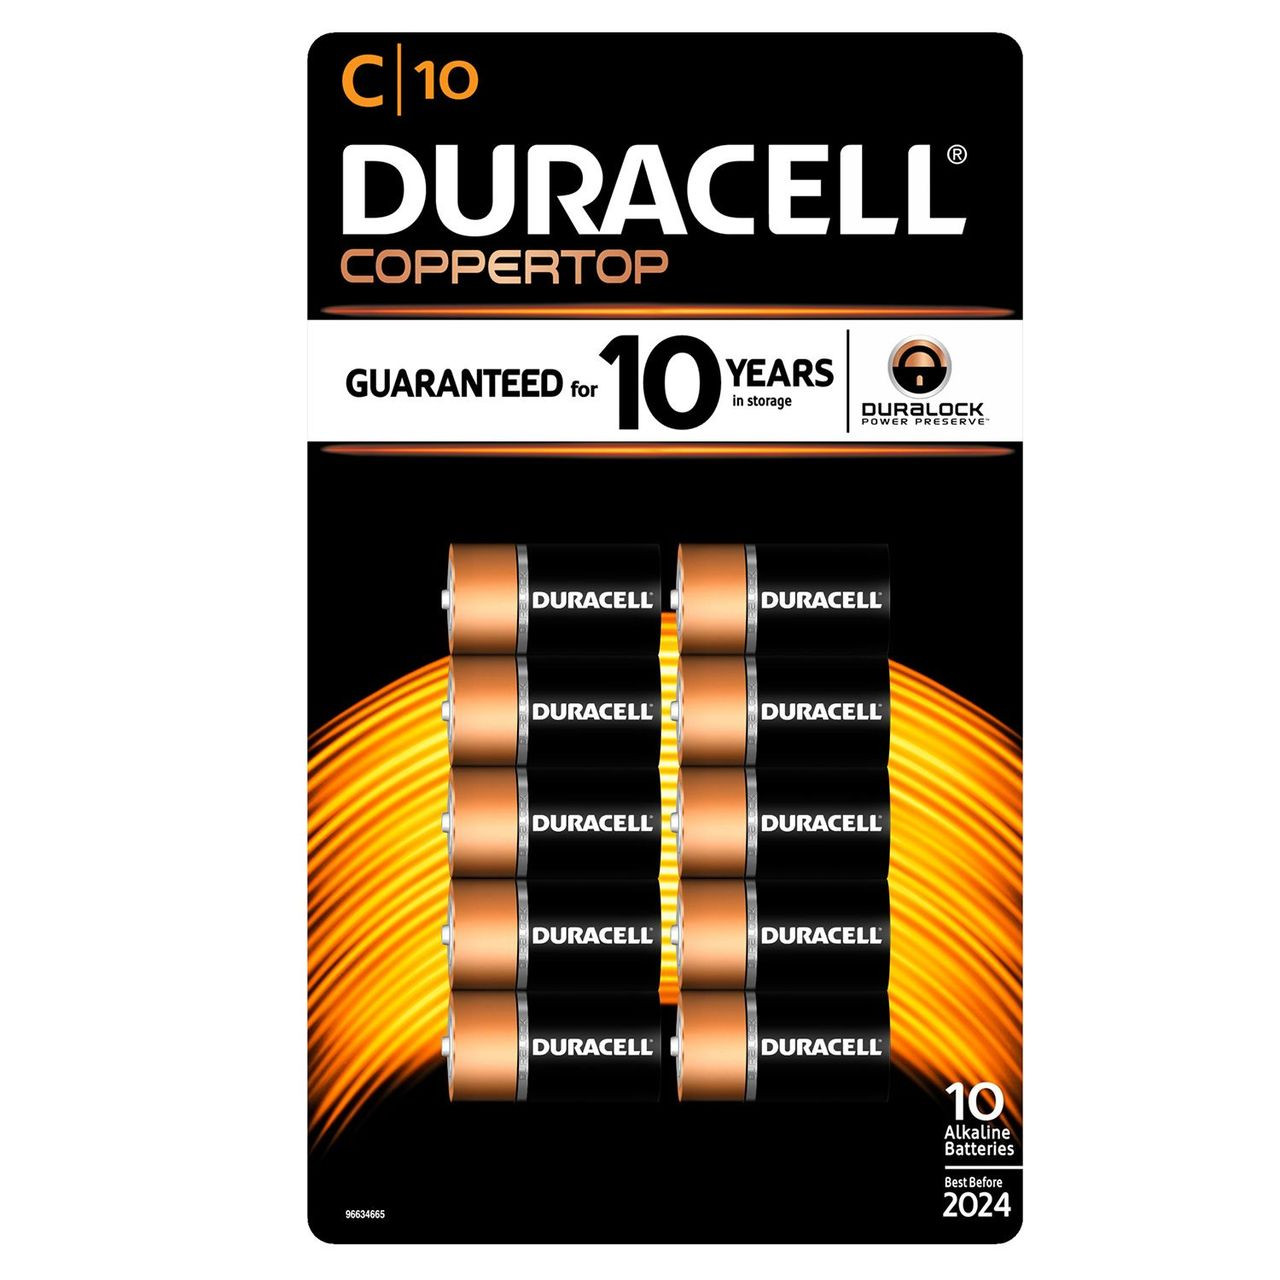 Duracell Coppertop C Batteries - Alkaline 10 Pack - MN1400